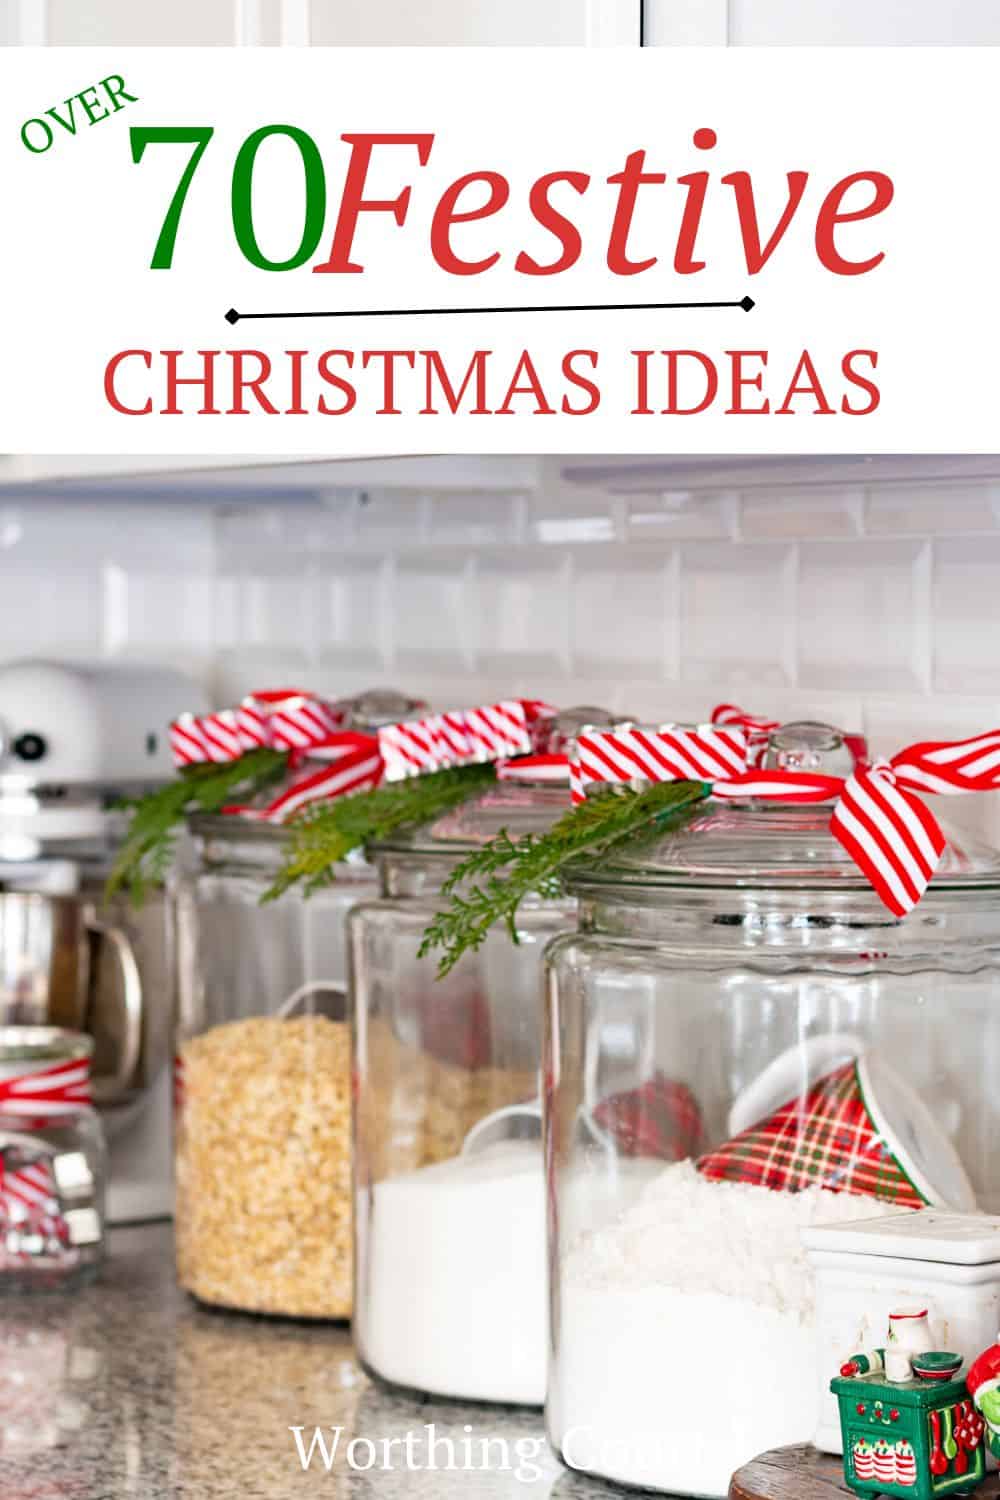 Pinterest graphic for festive Christmas decorating ideas